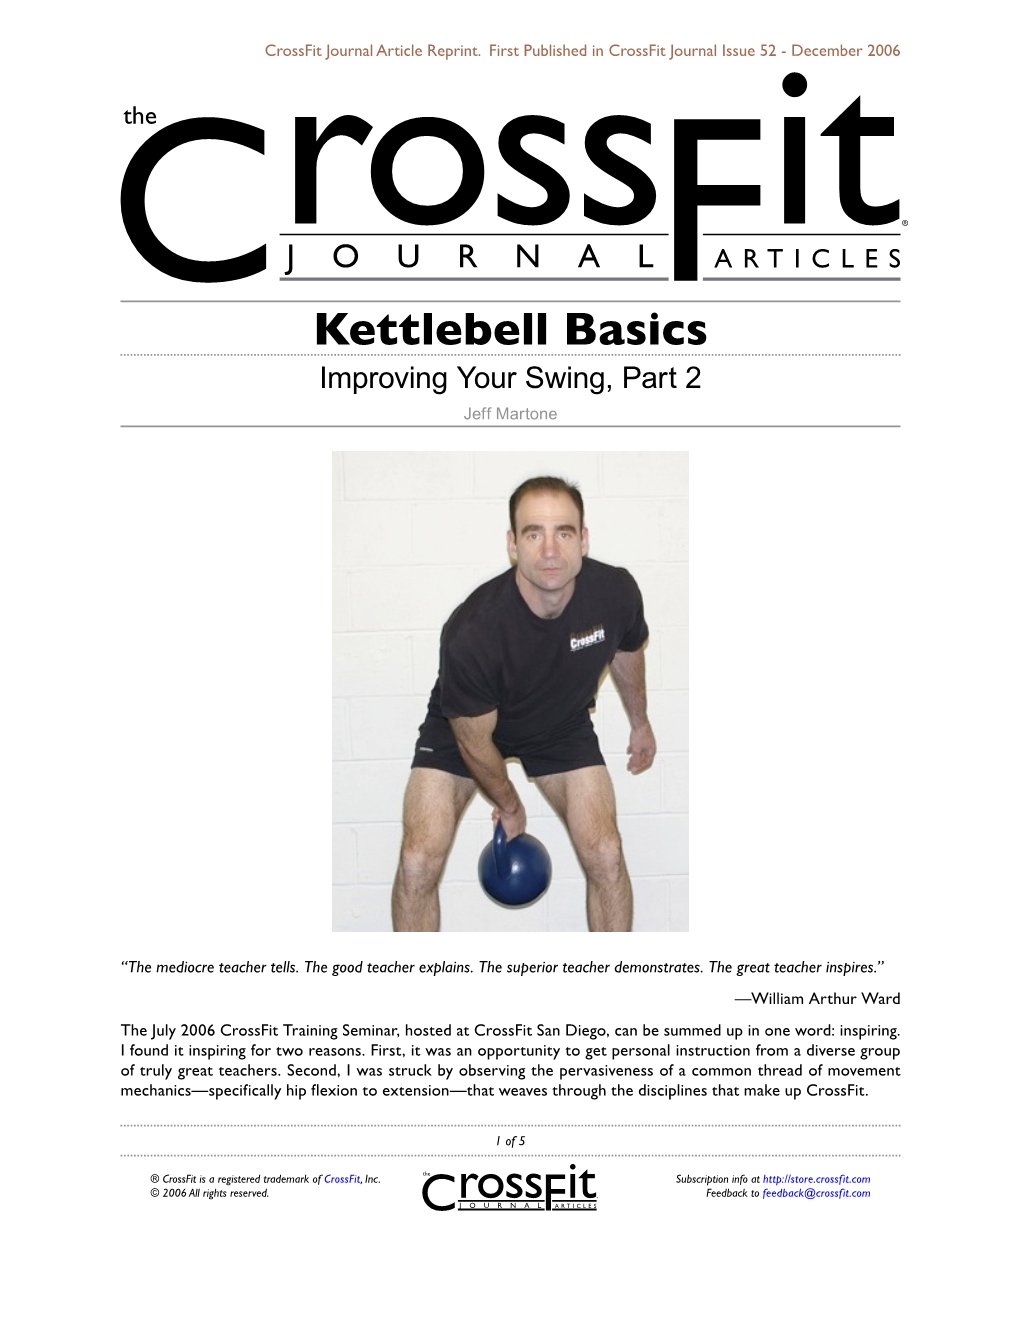 Kettlebell Basics Improving Your Swing, Part 2 Jeff Martone